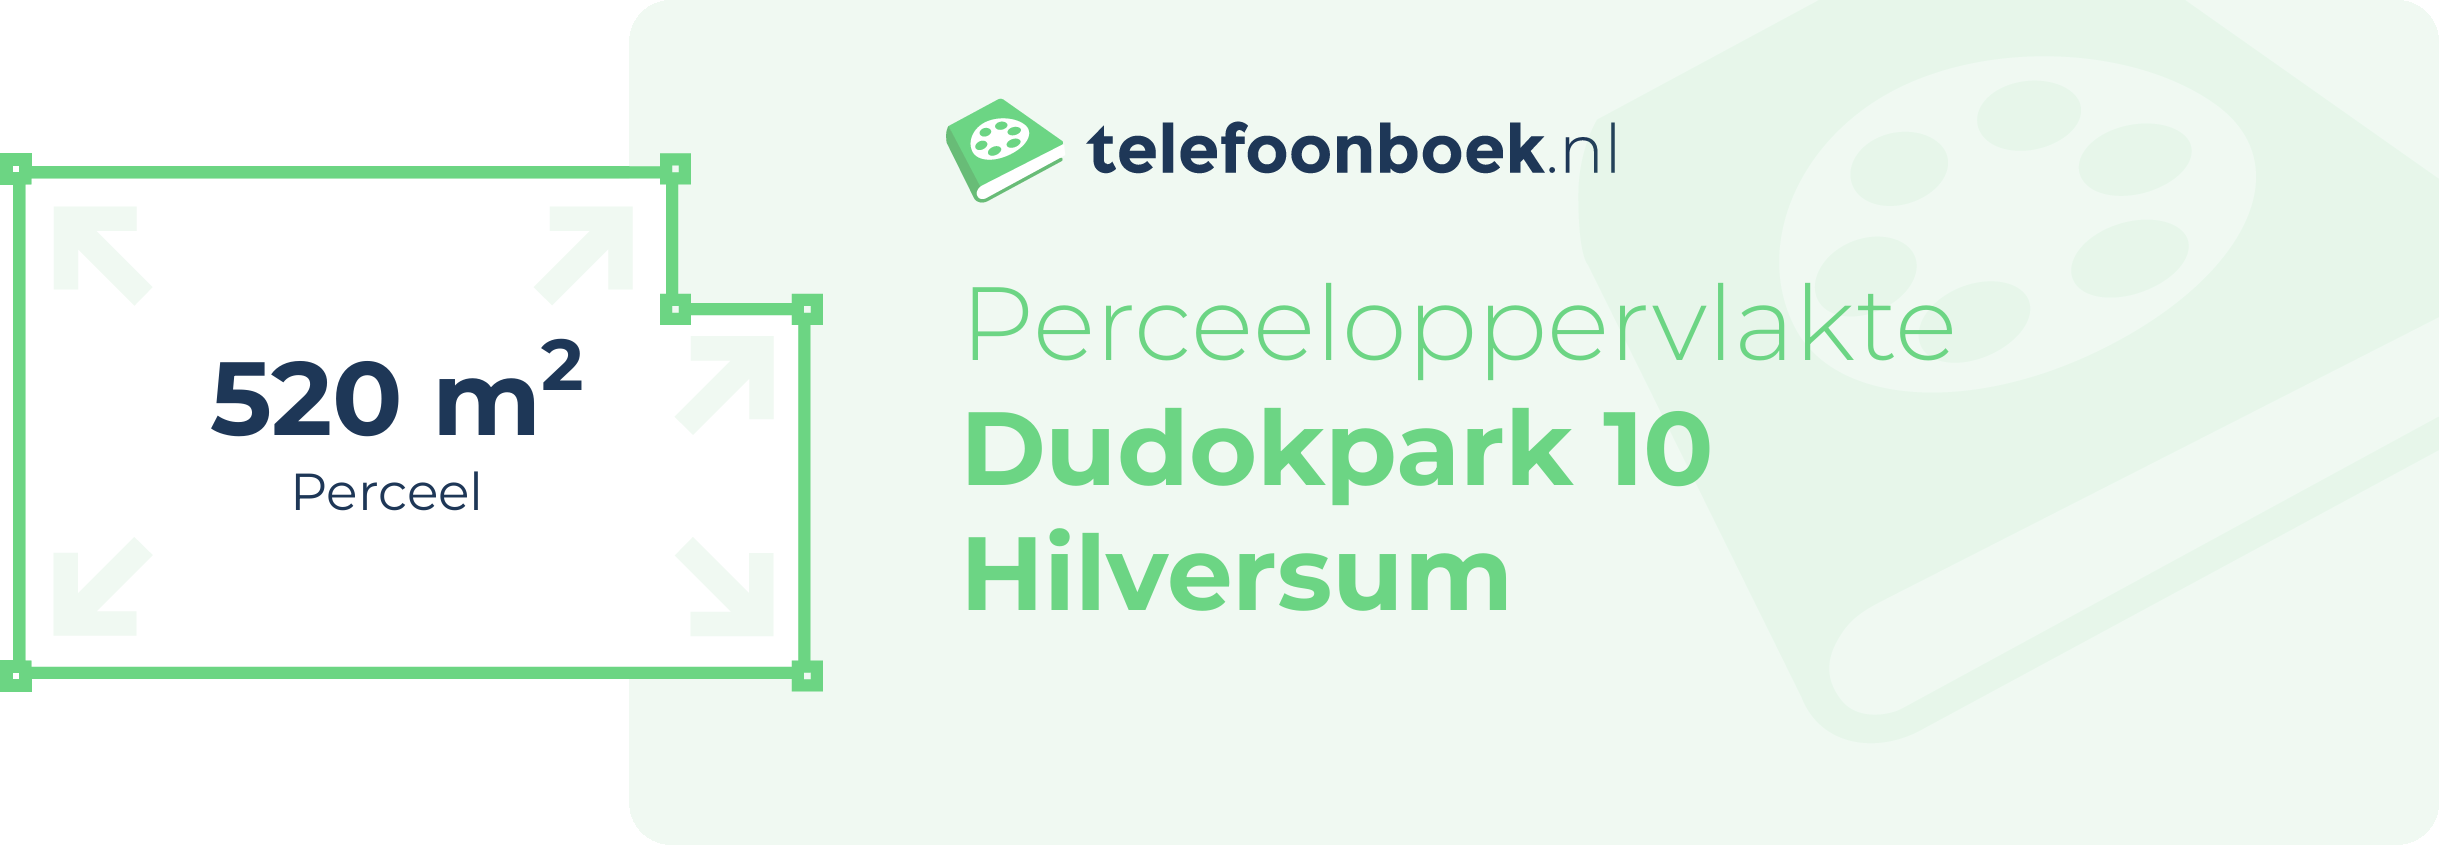 Perceeloppervlakte Dudokpark 10 Hilversum